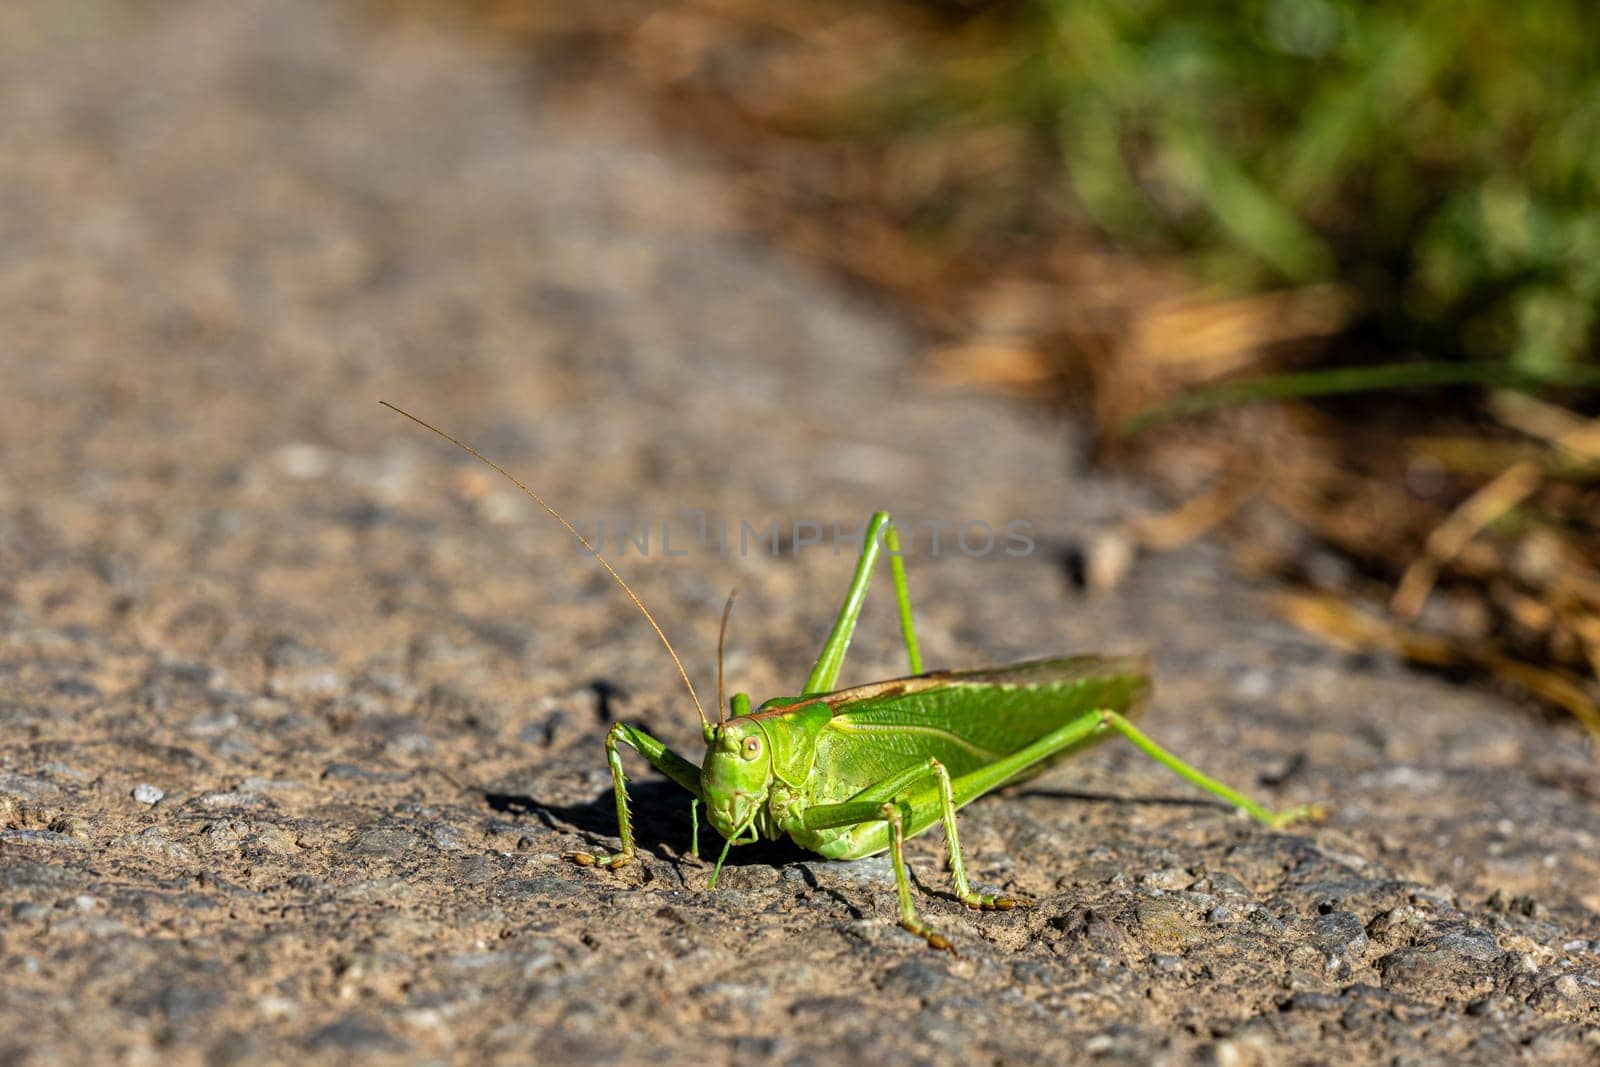 A closeup shot of a large green grasshopper with long antennae